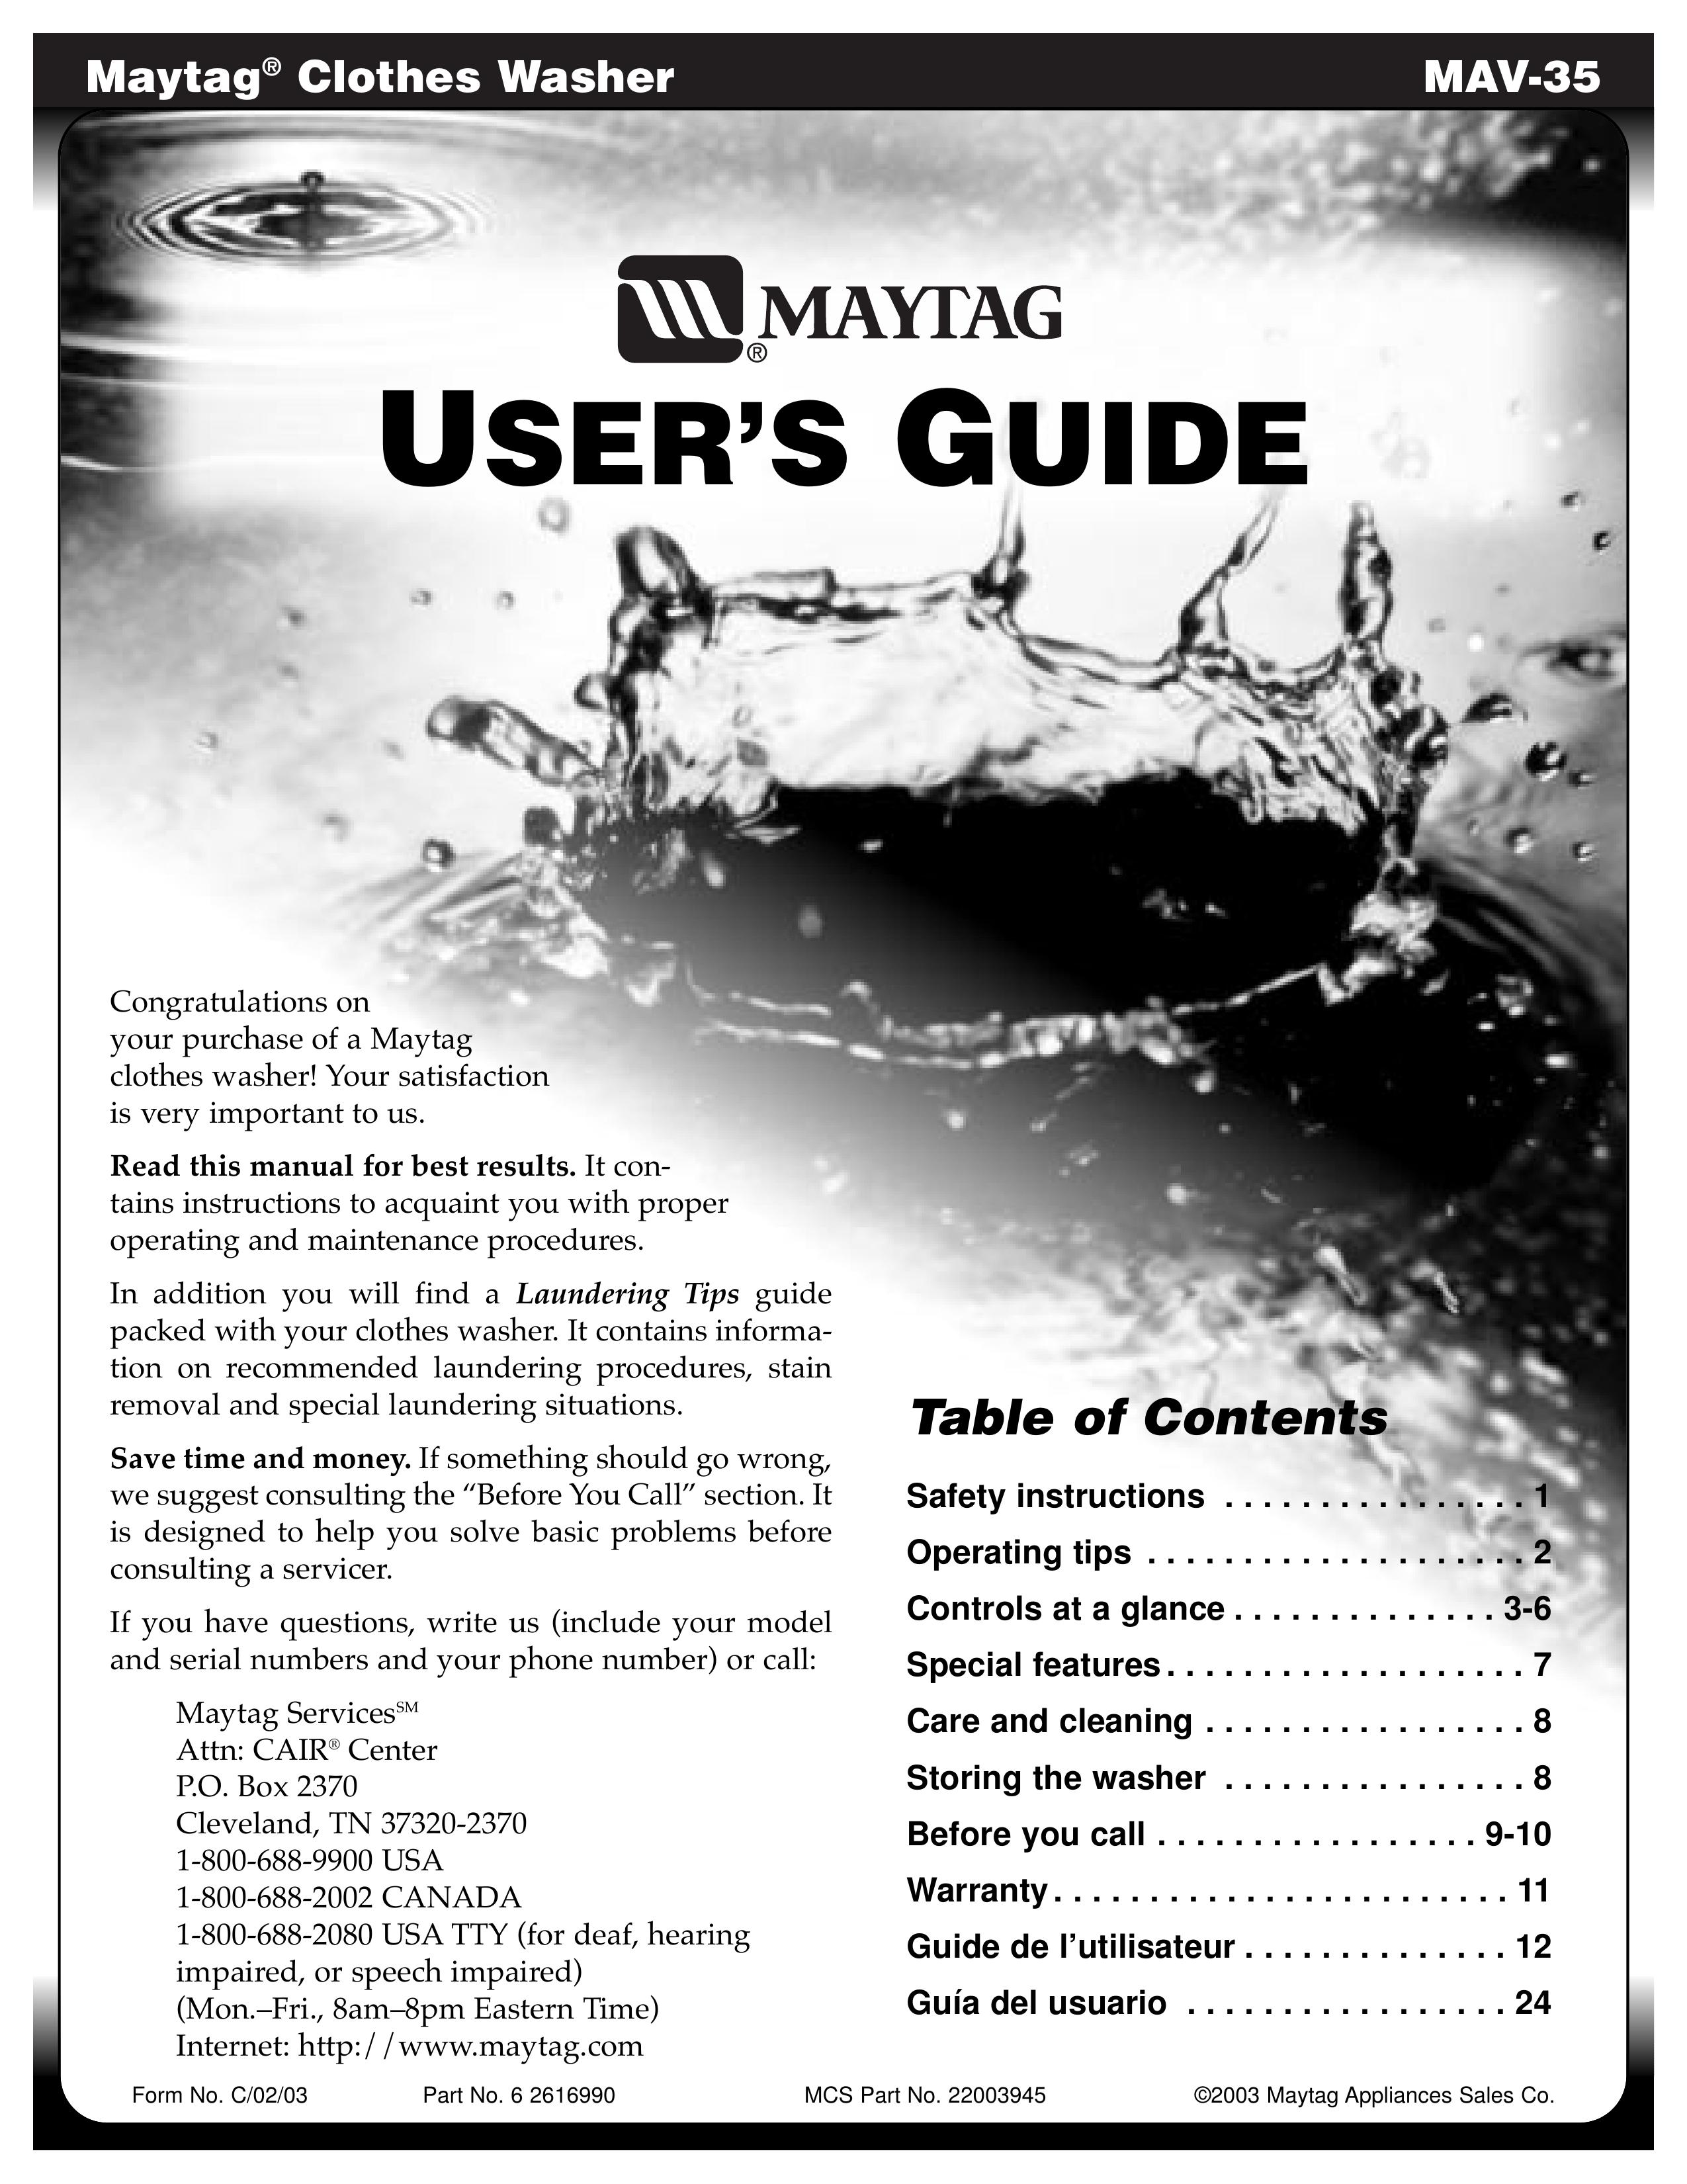 Maytag MAV-35 Washer/Dryer User Manual